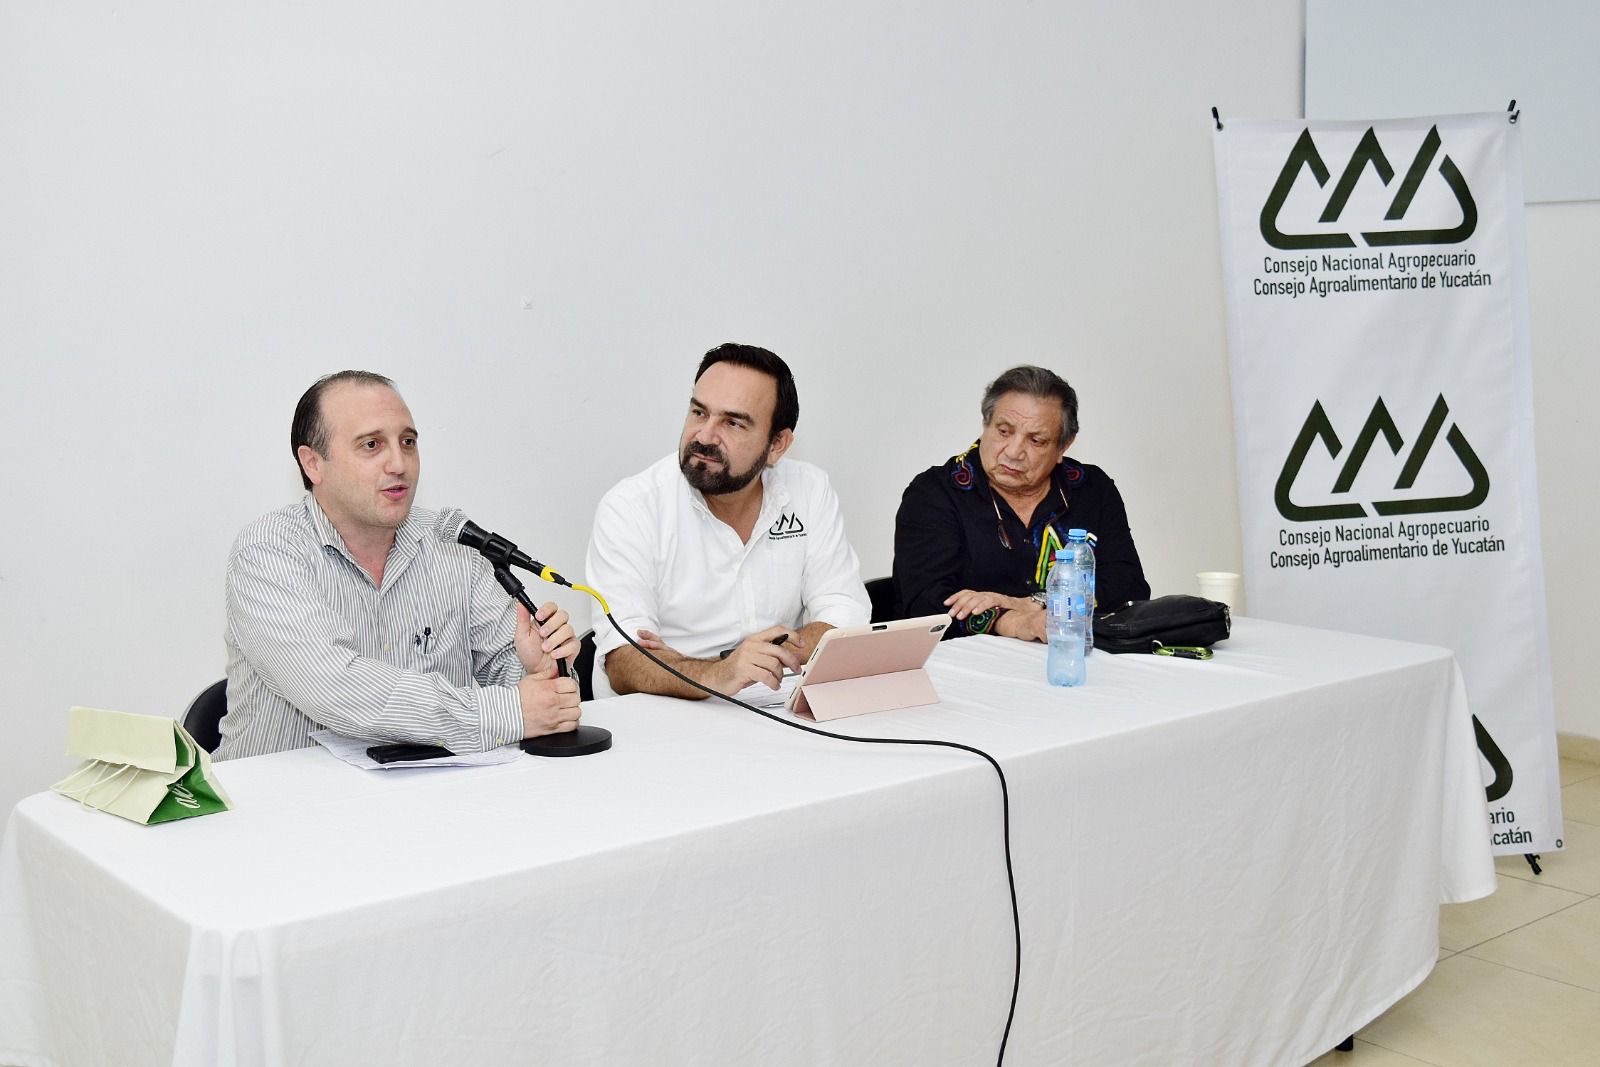 Ratifican a Ali Charruf como presidente del Consejo Nacional Agropecuario en Yucatán